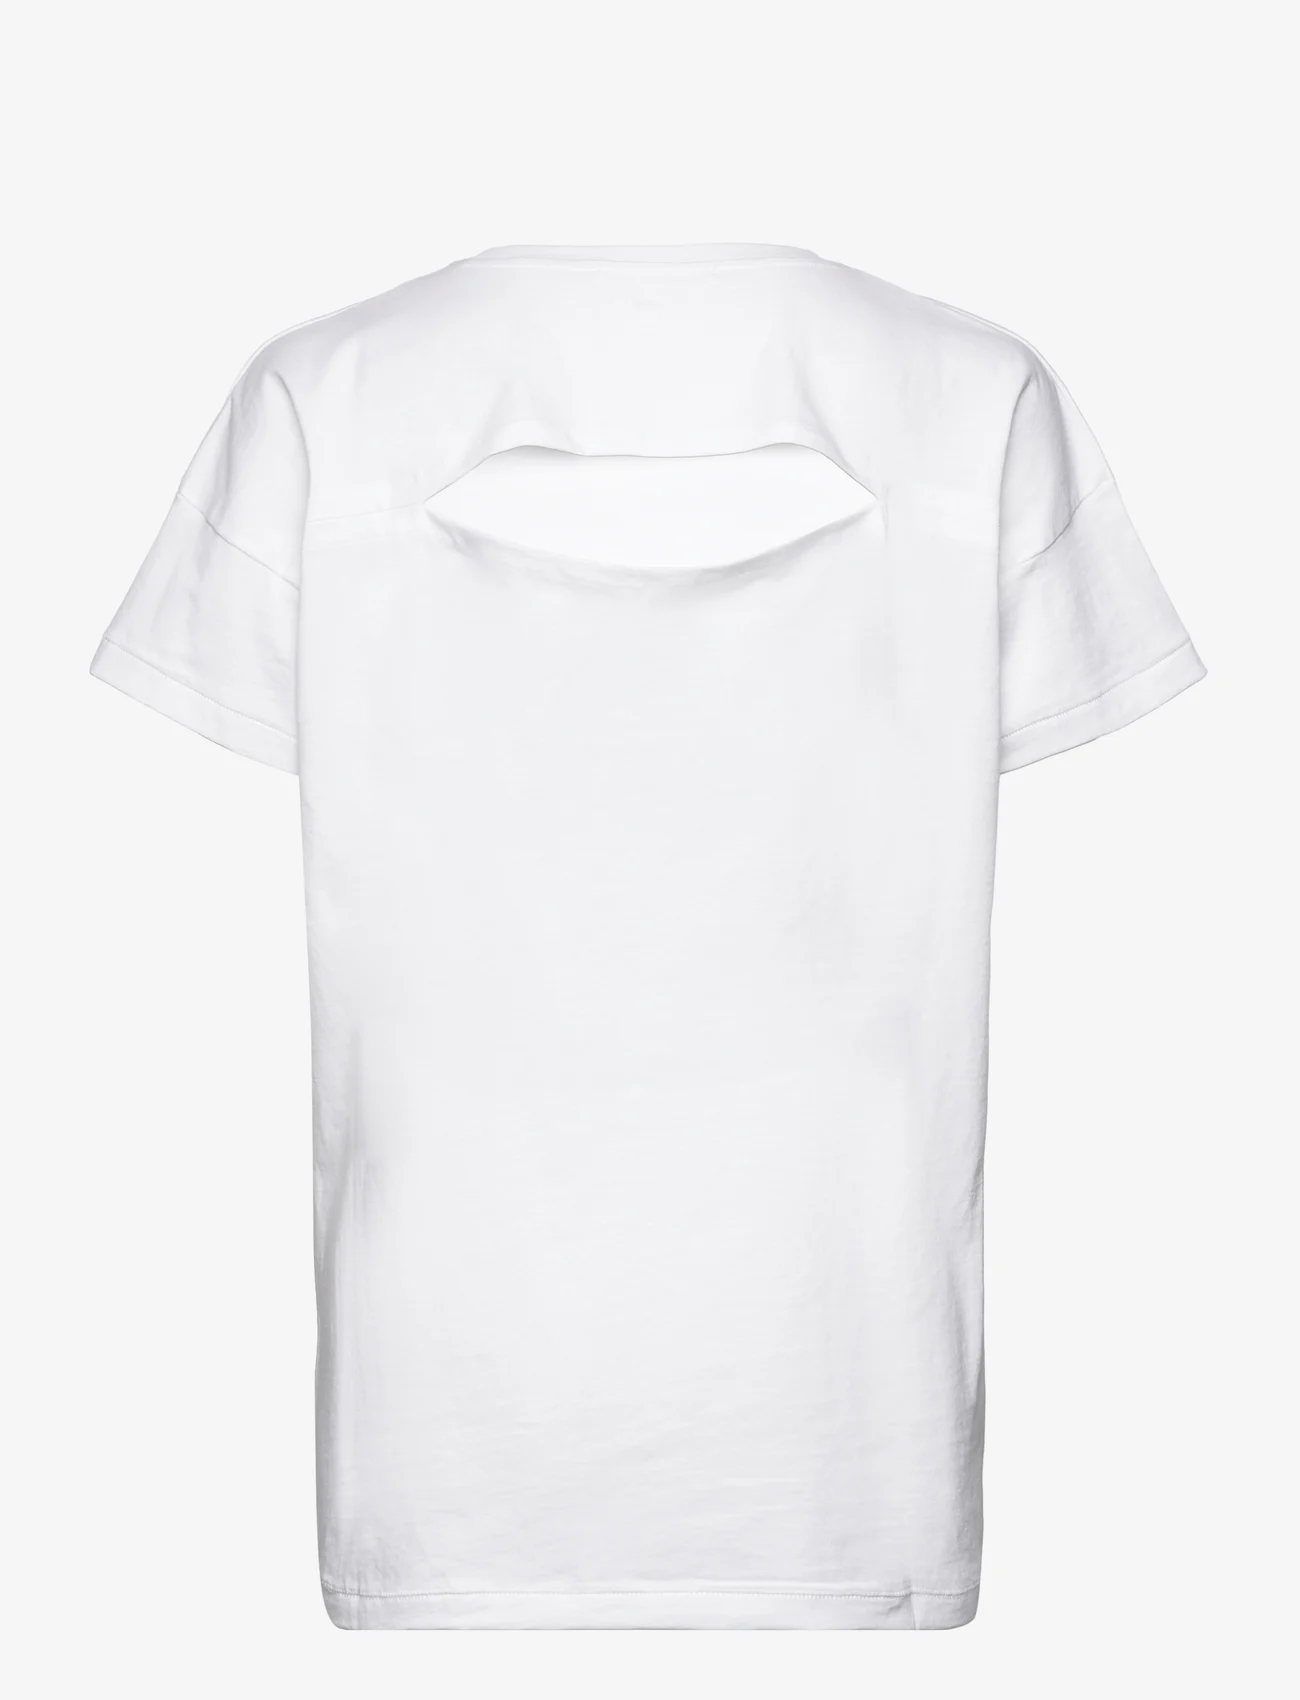 Rabens Saloner - Cici - t-shirts & tops - white - 1